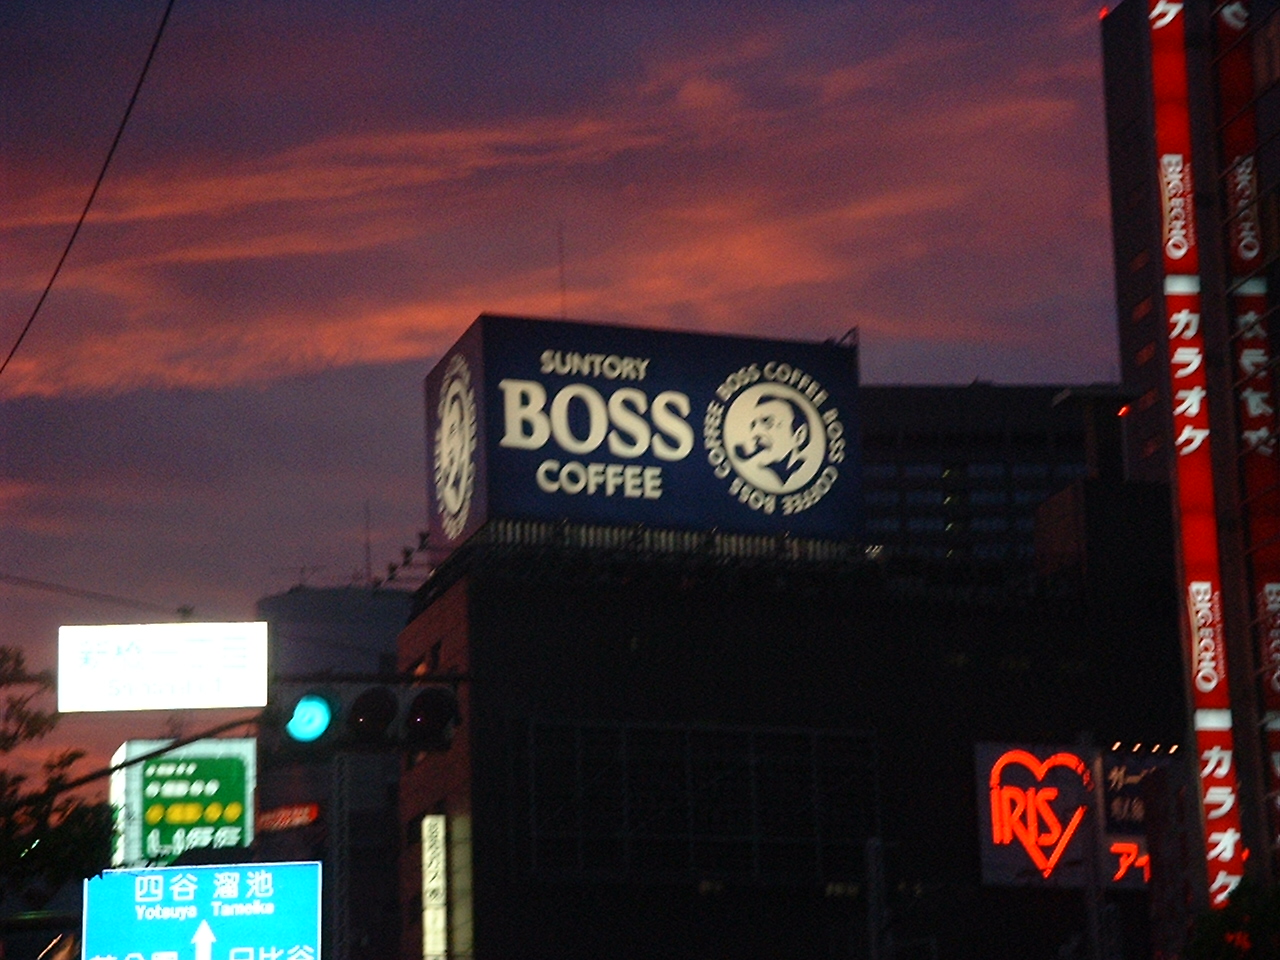 an illuminated sign for suntory boss coffee at dusk